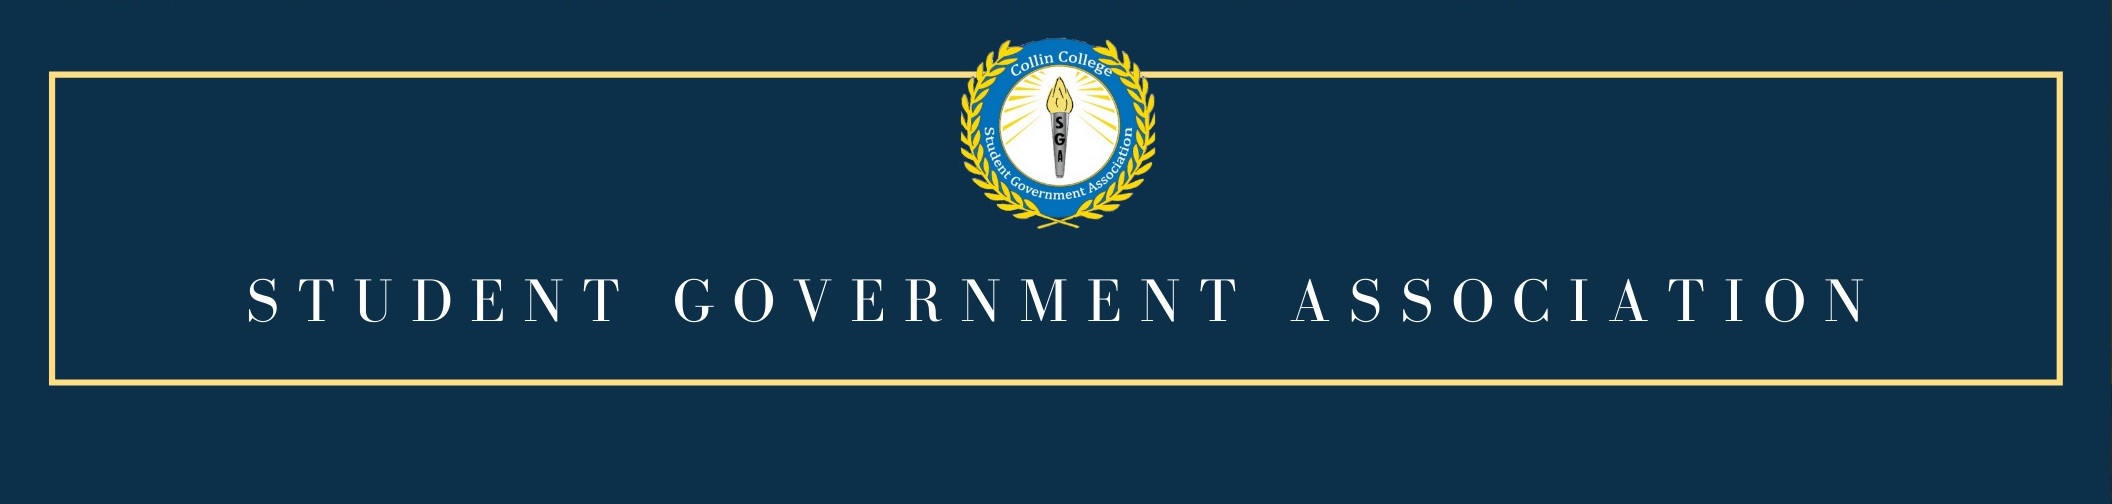 student government association